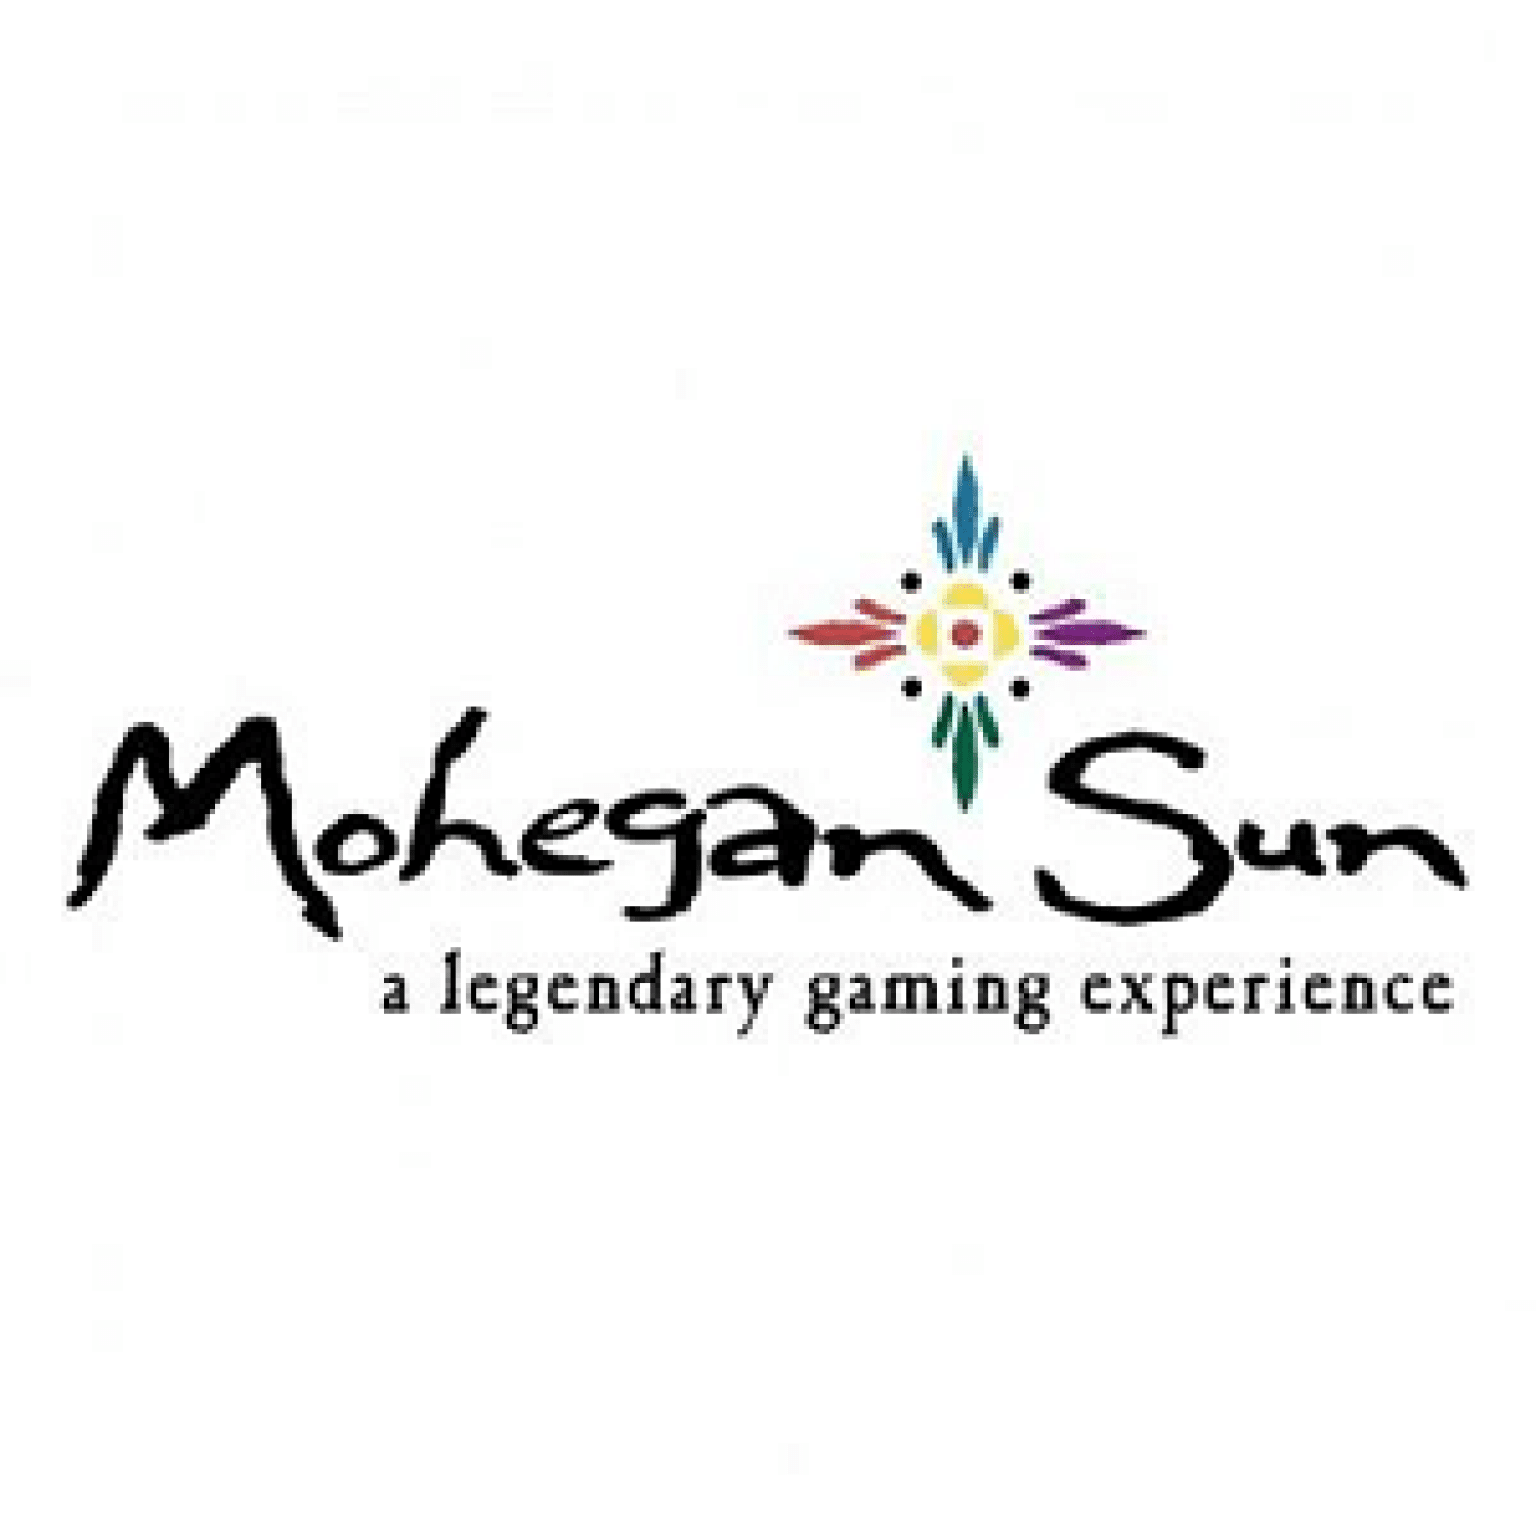 Mohegan Sun Online Casino for apple download free